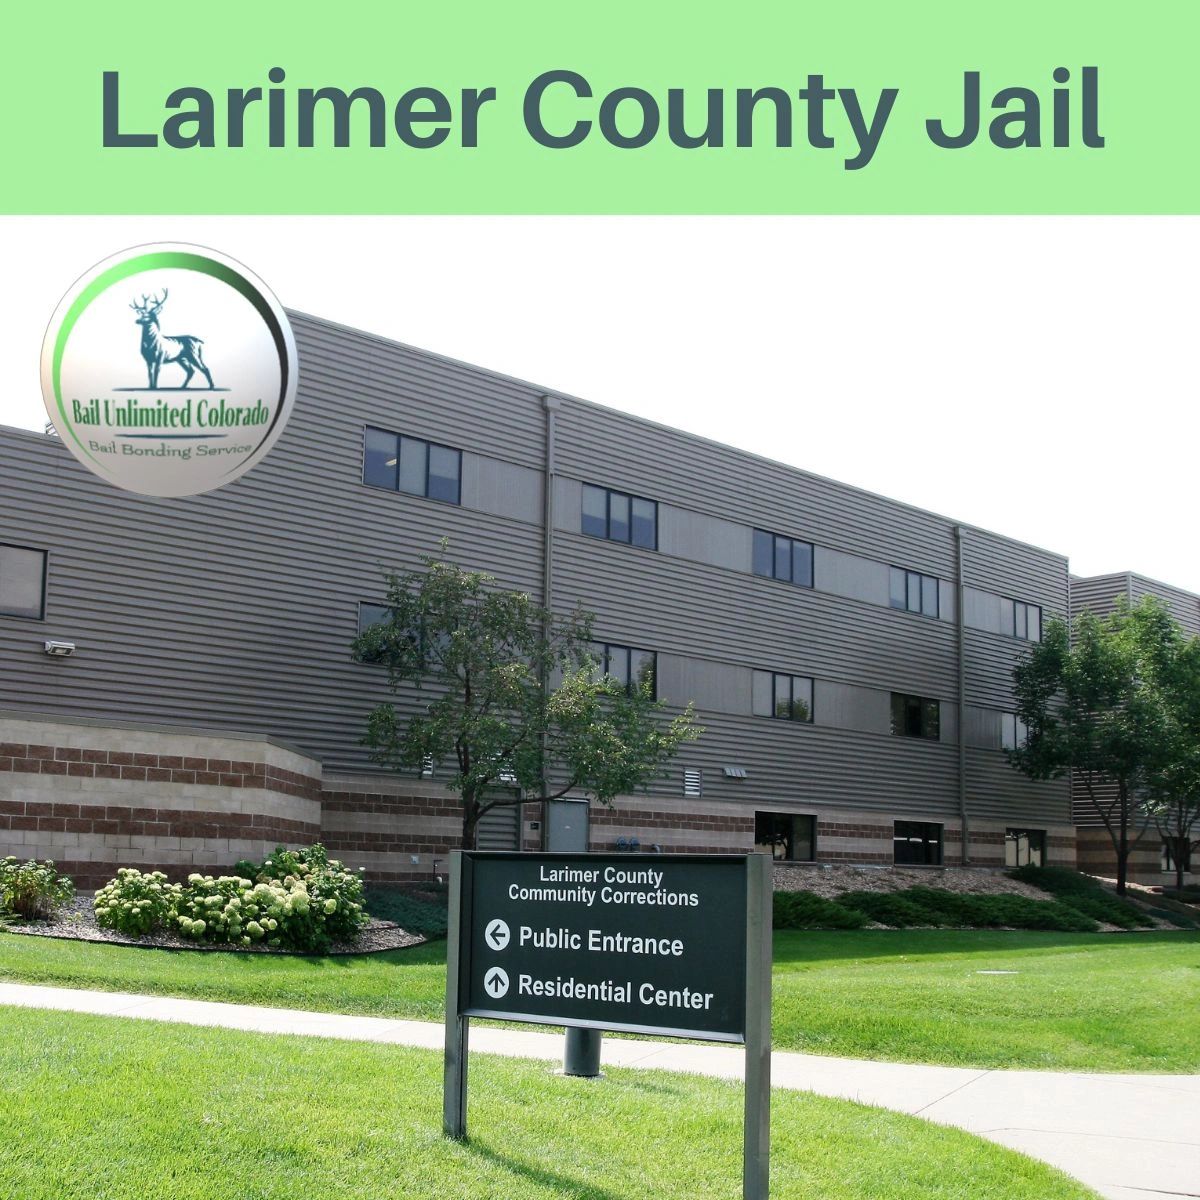 Larimer county Jail Community Corrections LOGO Bail Unlimited Colorado   County Jail Building 